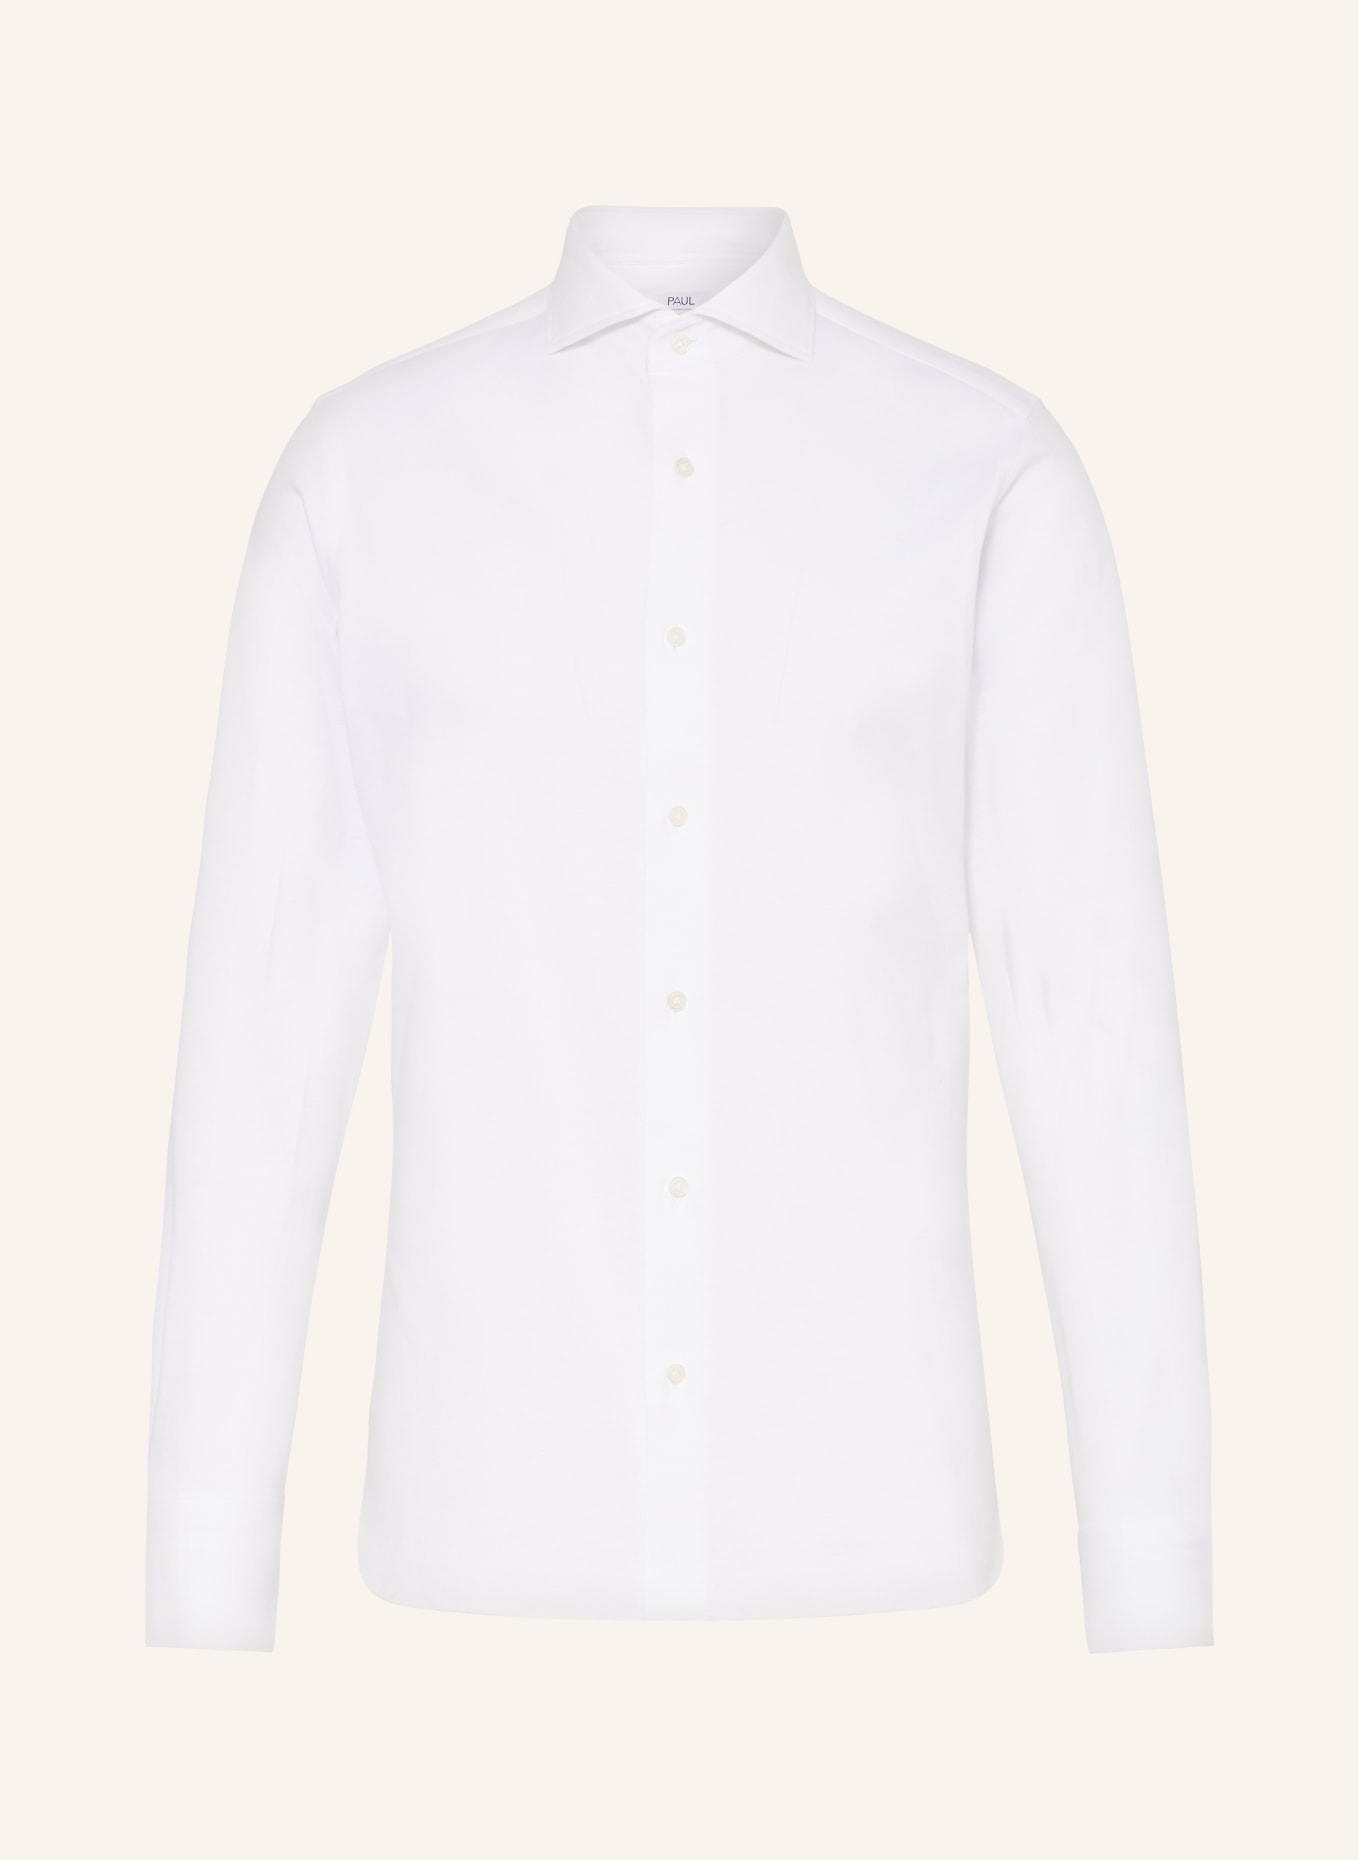 PAUL Piqué-Hemd Slim Fit, Farbe: WEISS (Bild 1)